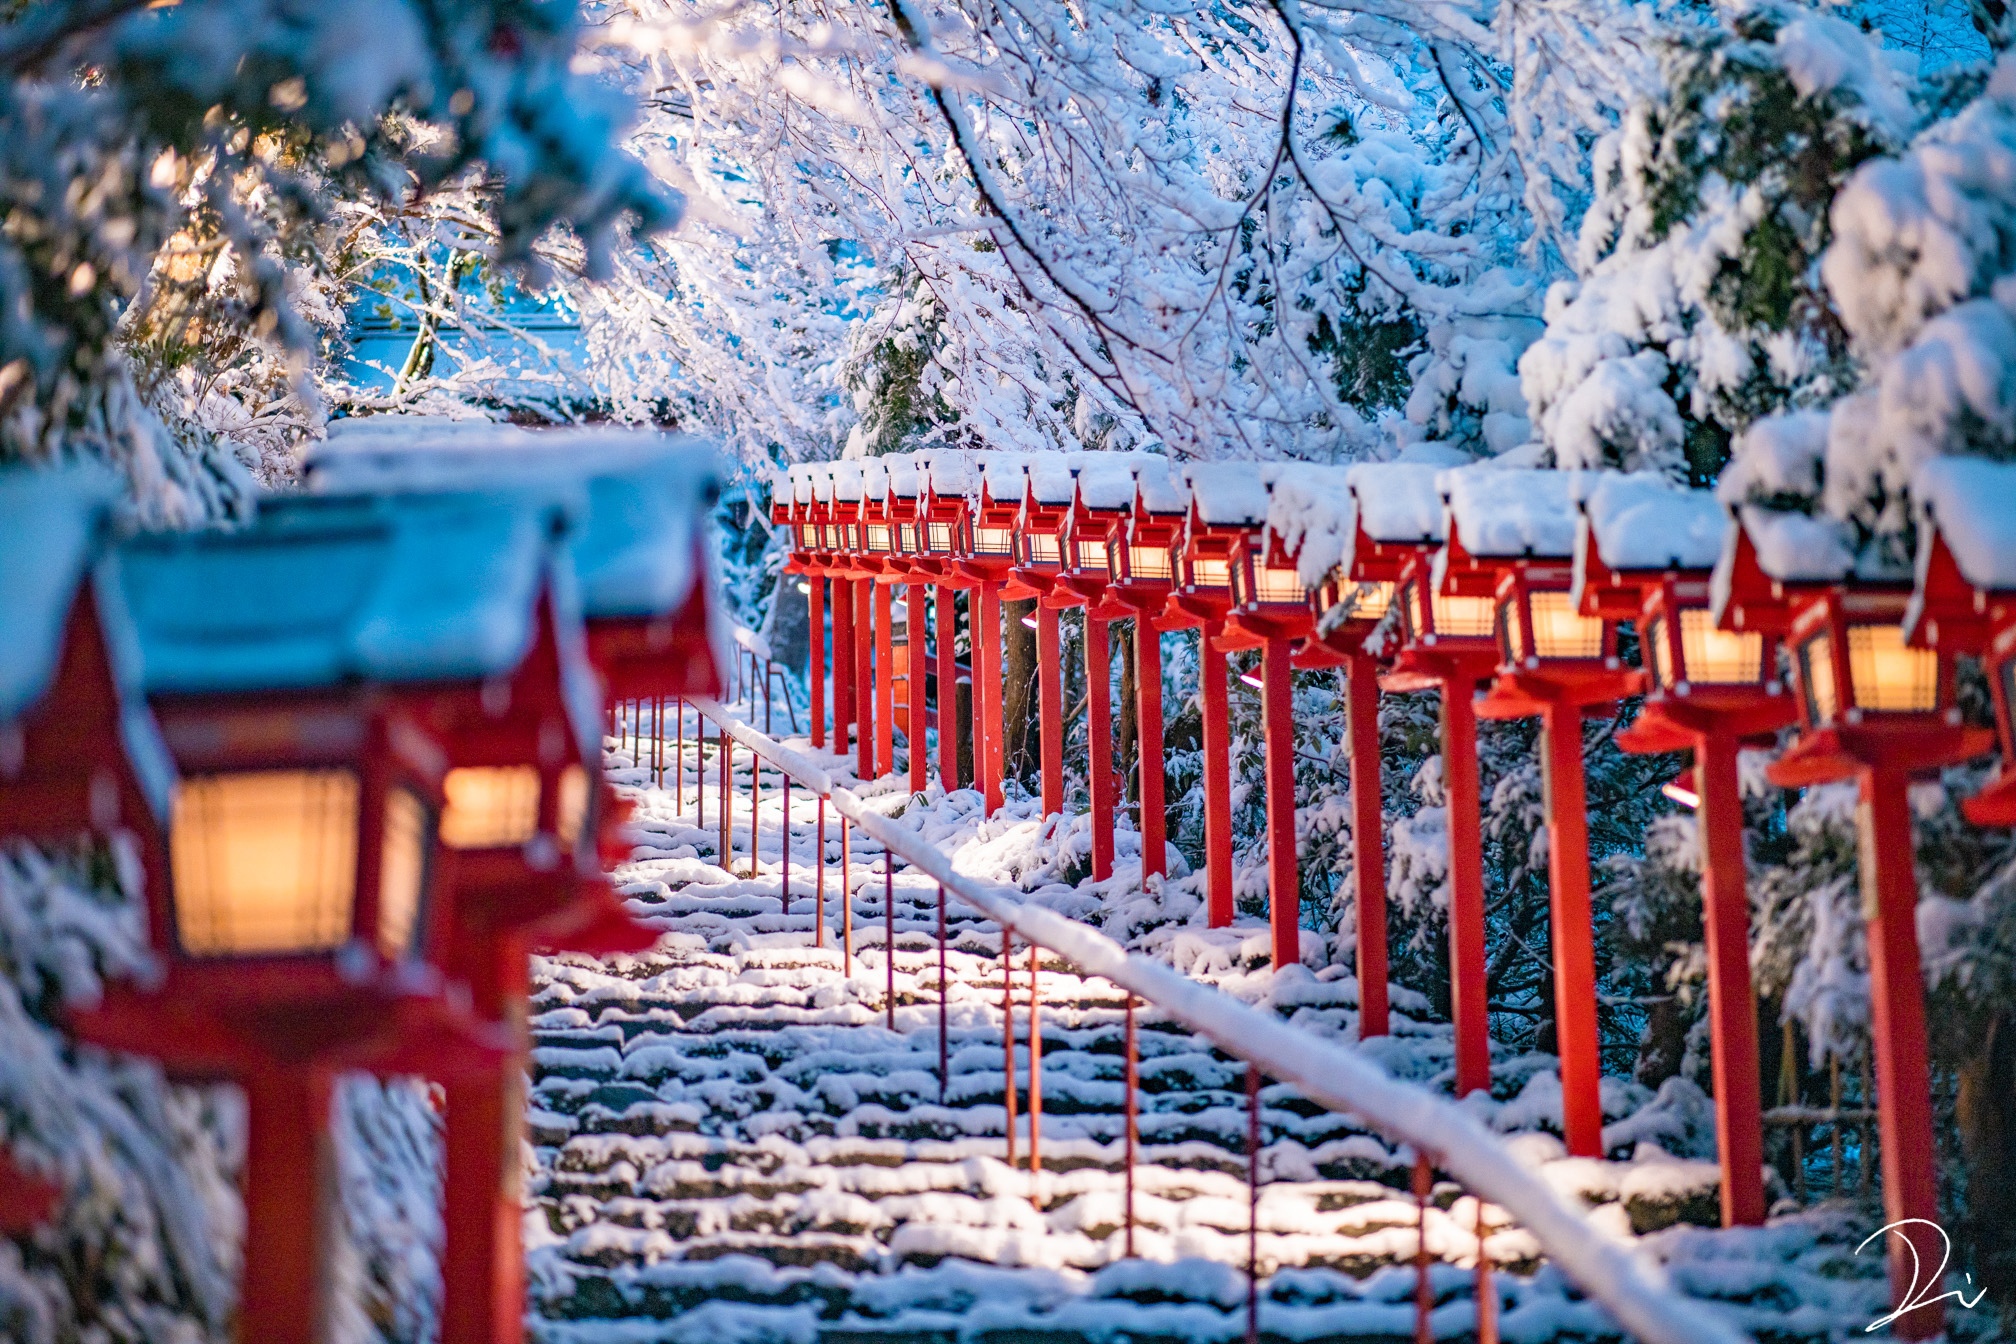 General 2016x1344 Japan winter Asian architecture snow trees lantern steps Kyoto